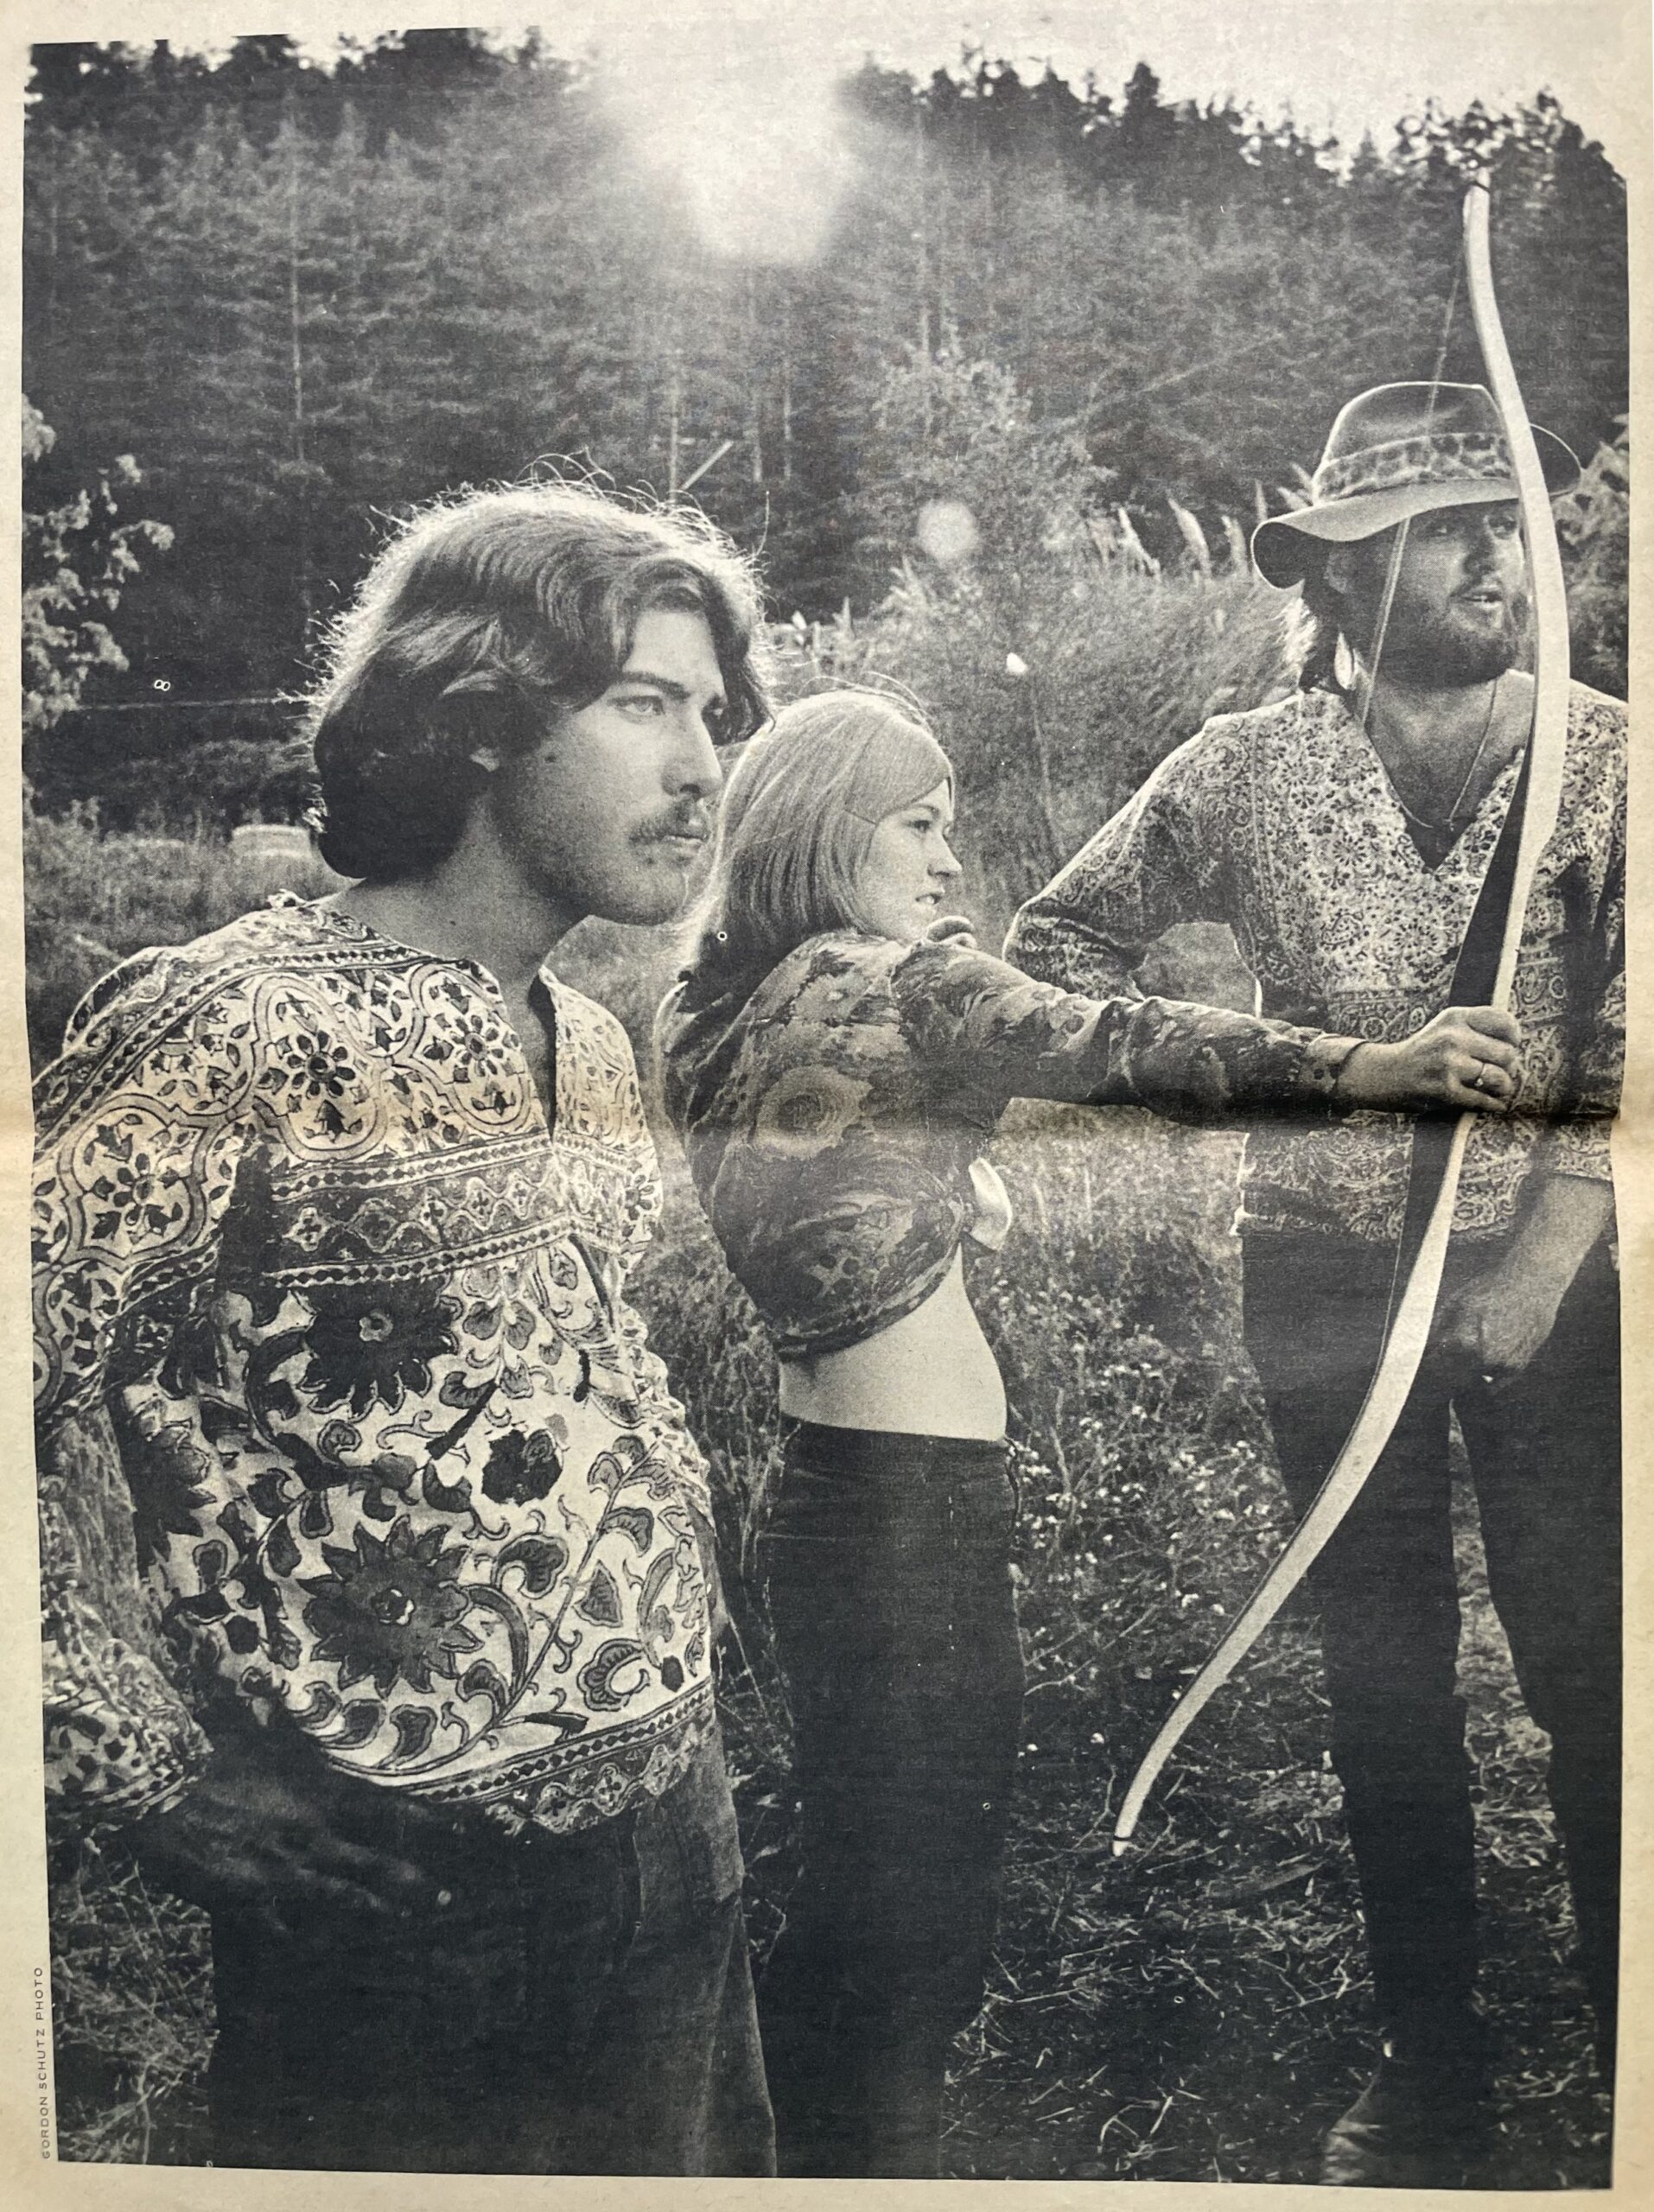 Hippie Archery Practice, 1967